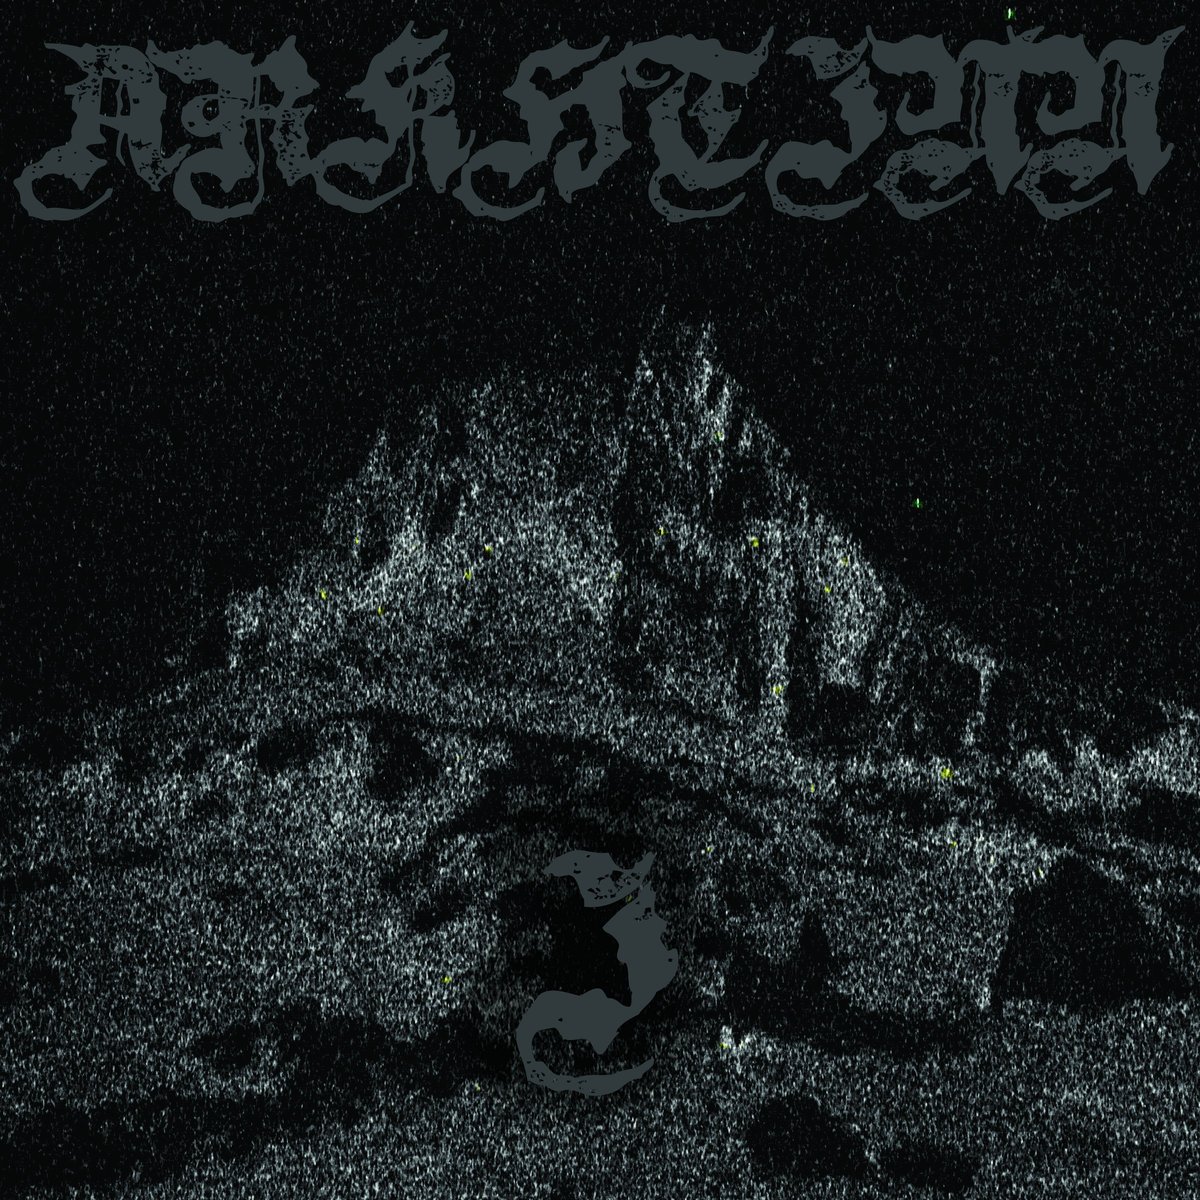 Fallen flac. Ambient Black Metal обложка альбома с птицами. Space Black Metal. Ambient Black Metal France.